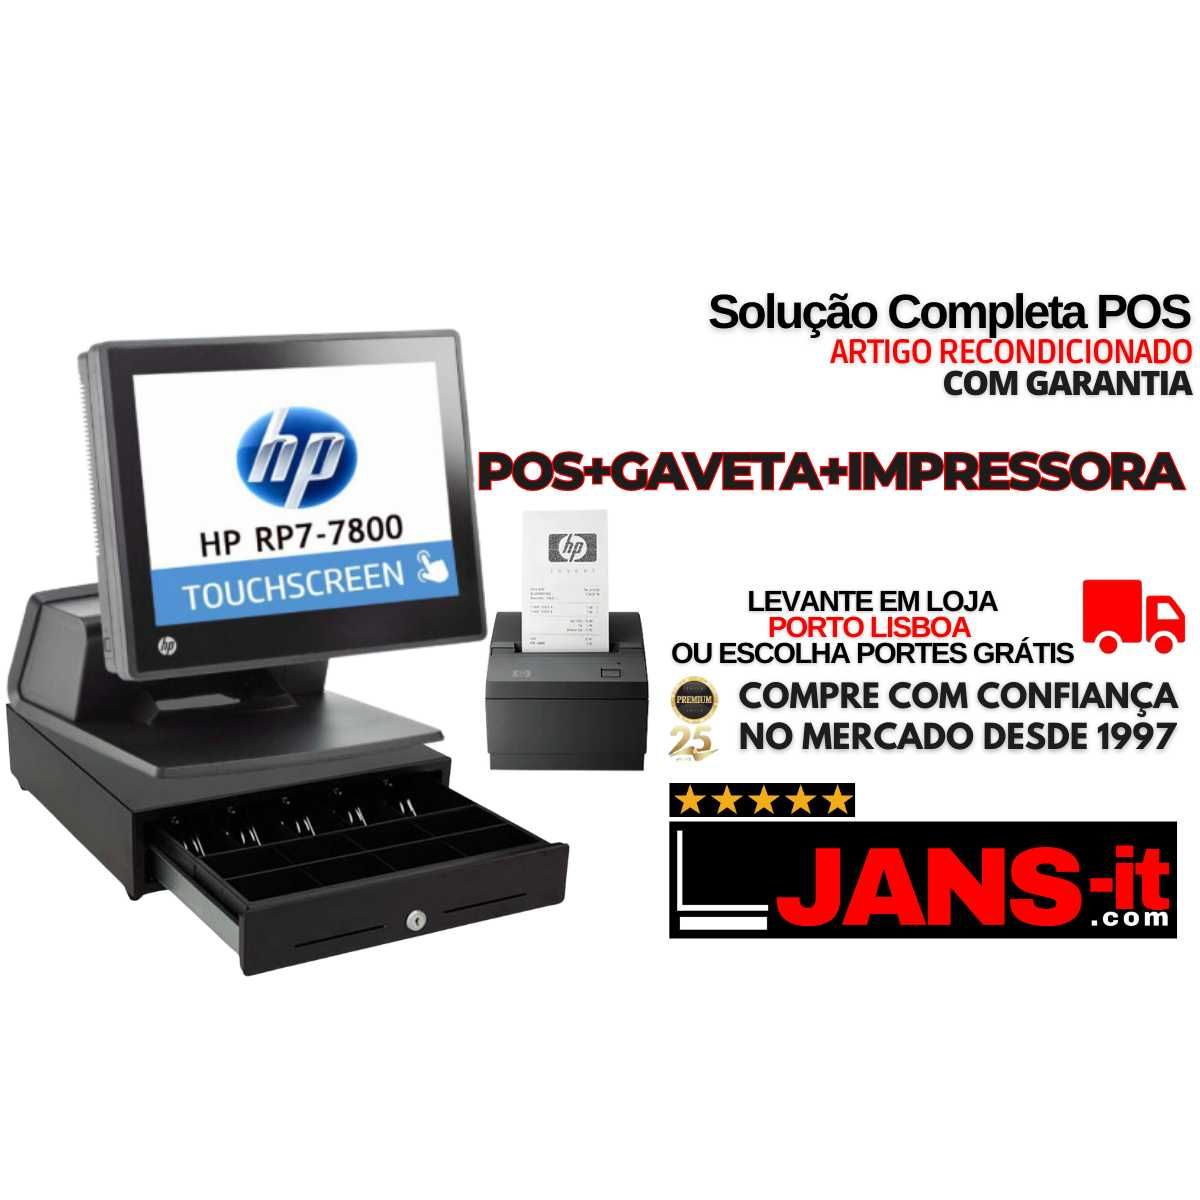 Sistema POS Completo - POS HP RP7 + Impressora + Gaveta